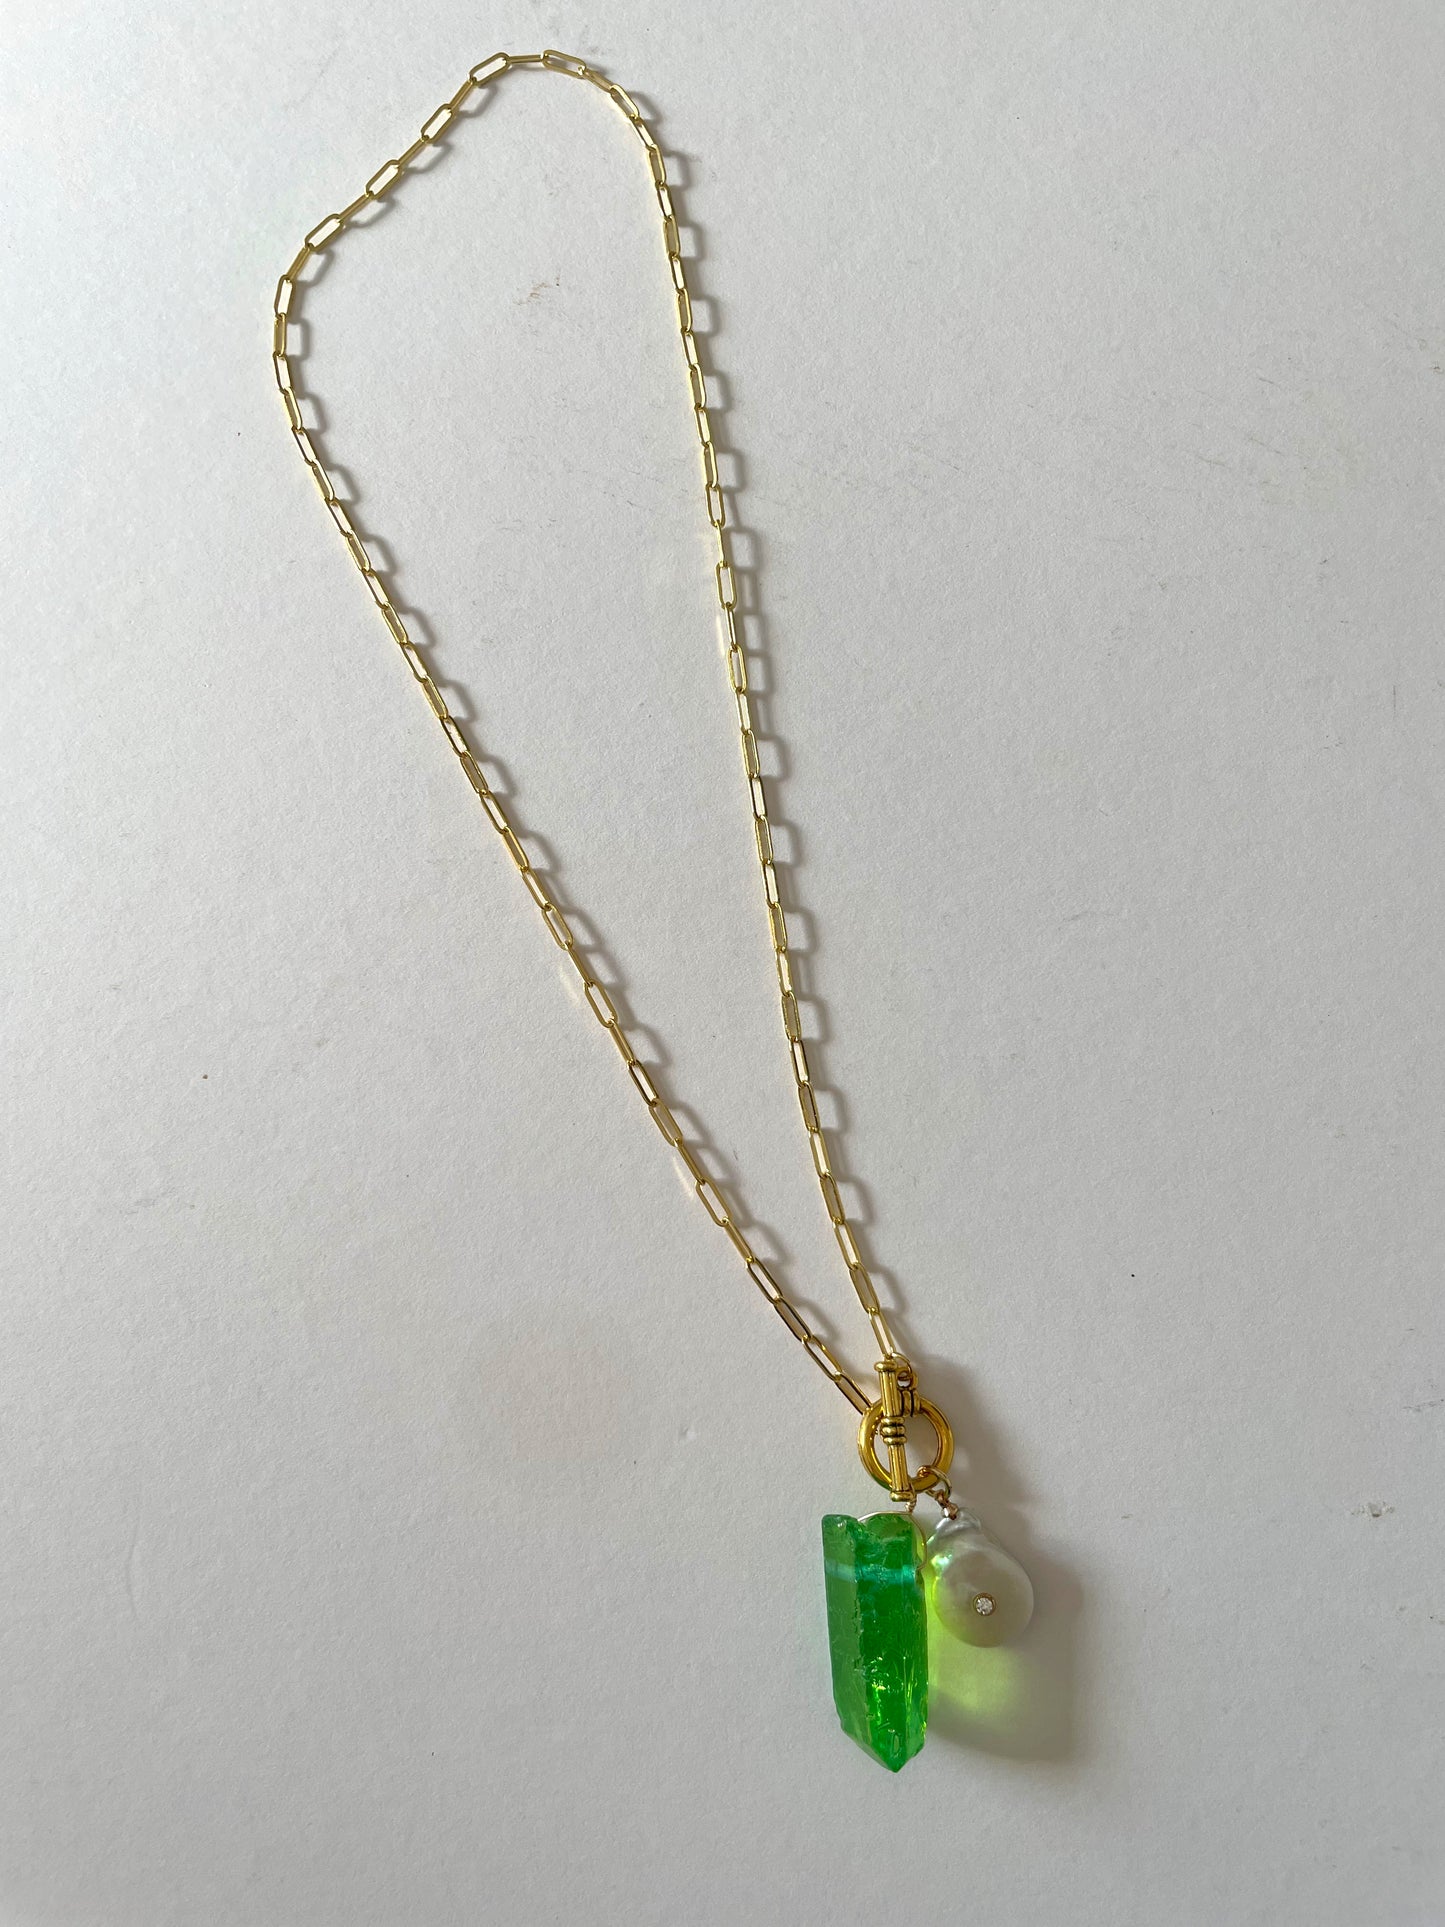 Citrus quartz necklace